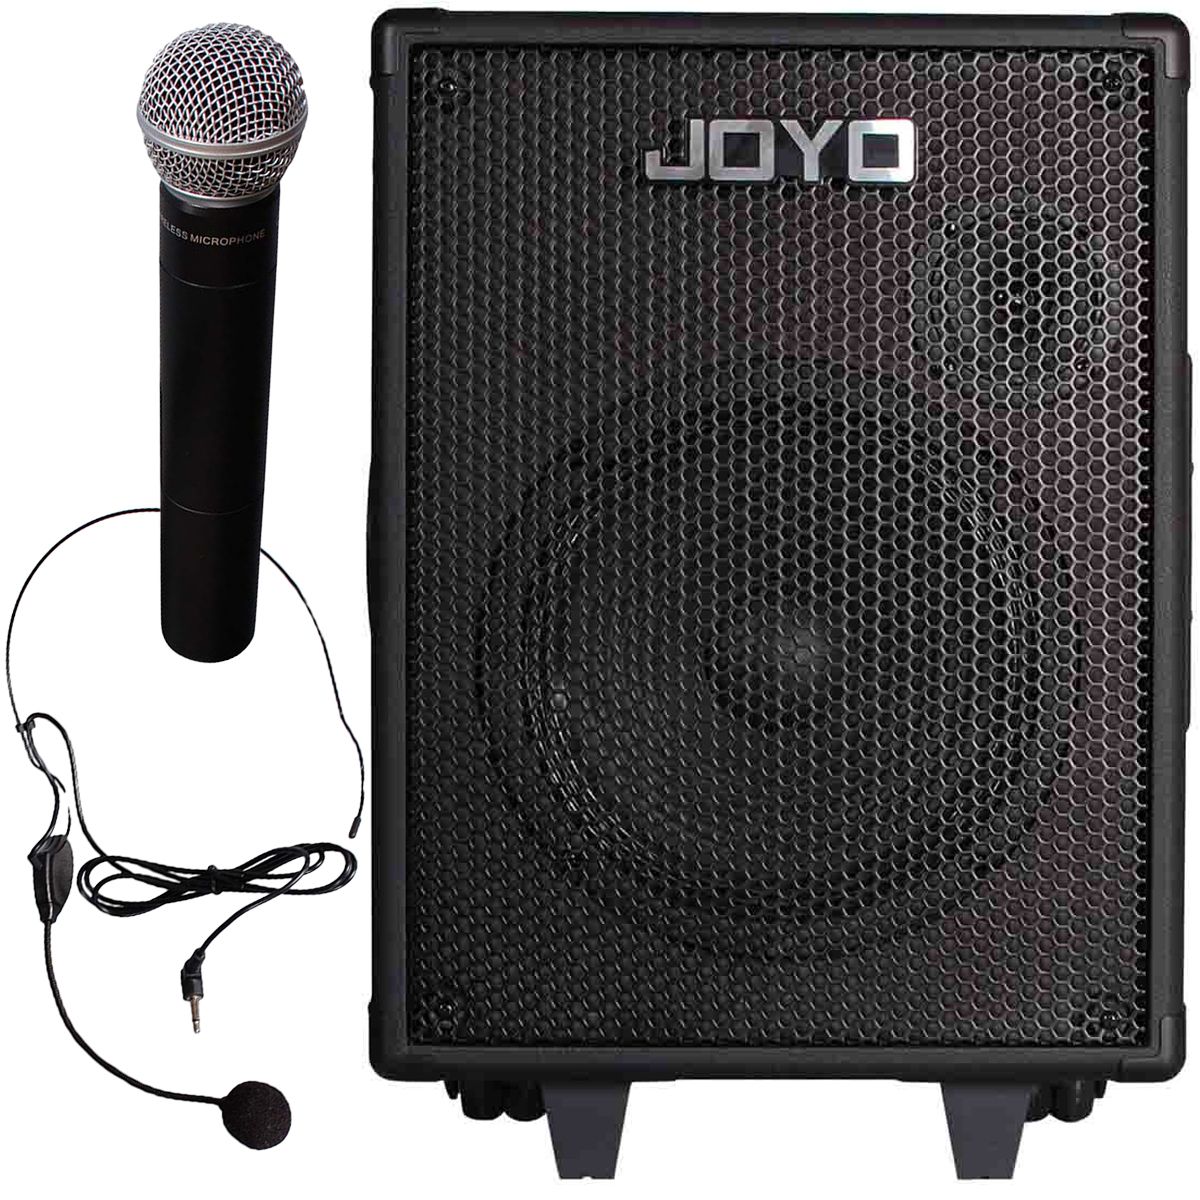 Joyo JPA-863 transportabelt anlæg m/ 2 x trådløs mikrofon